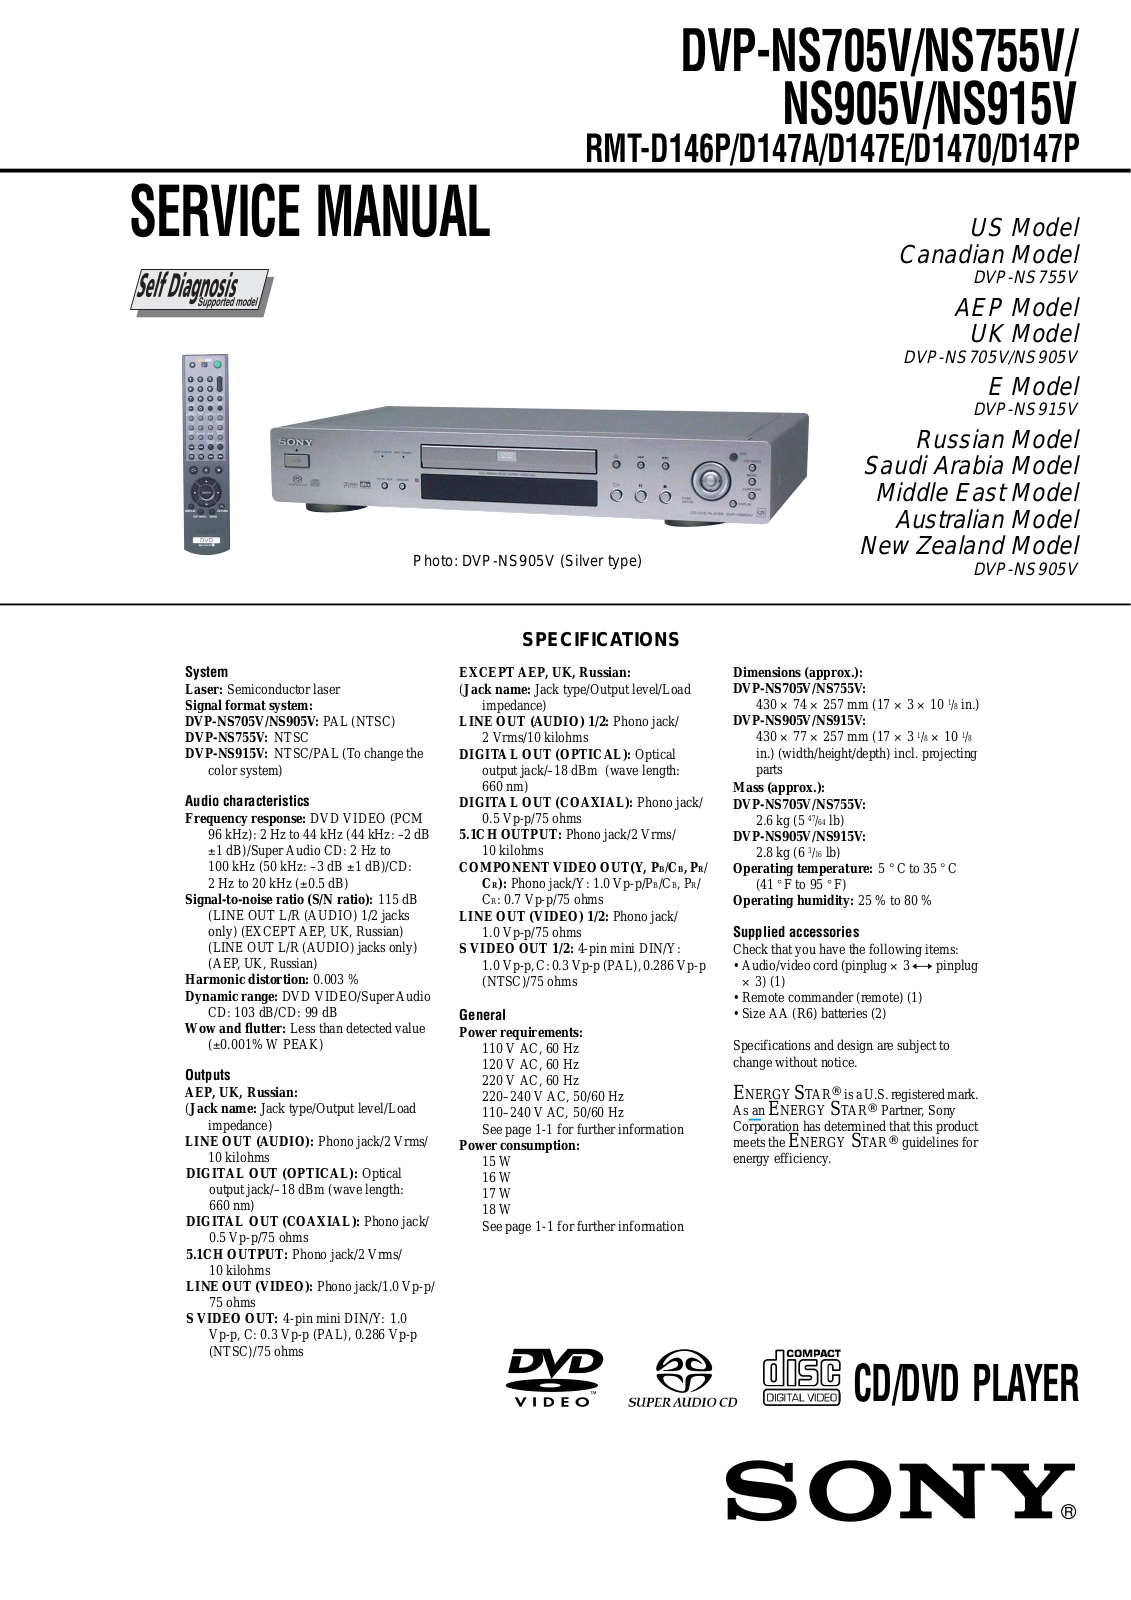 Sony DVP-NS705V, DVP-755V, DVP-905V, DVP-915V Service Manual